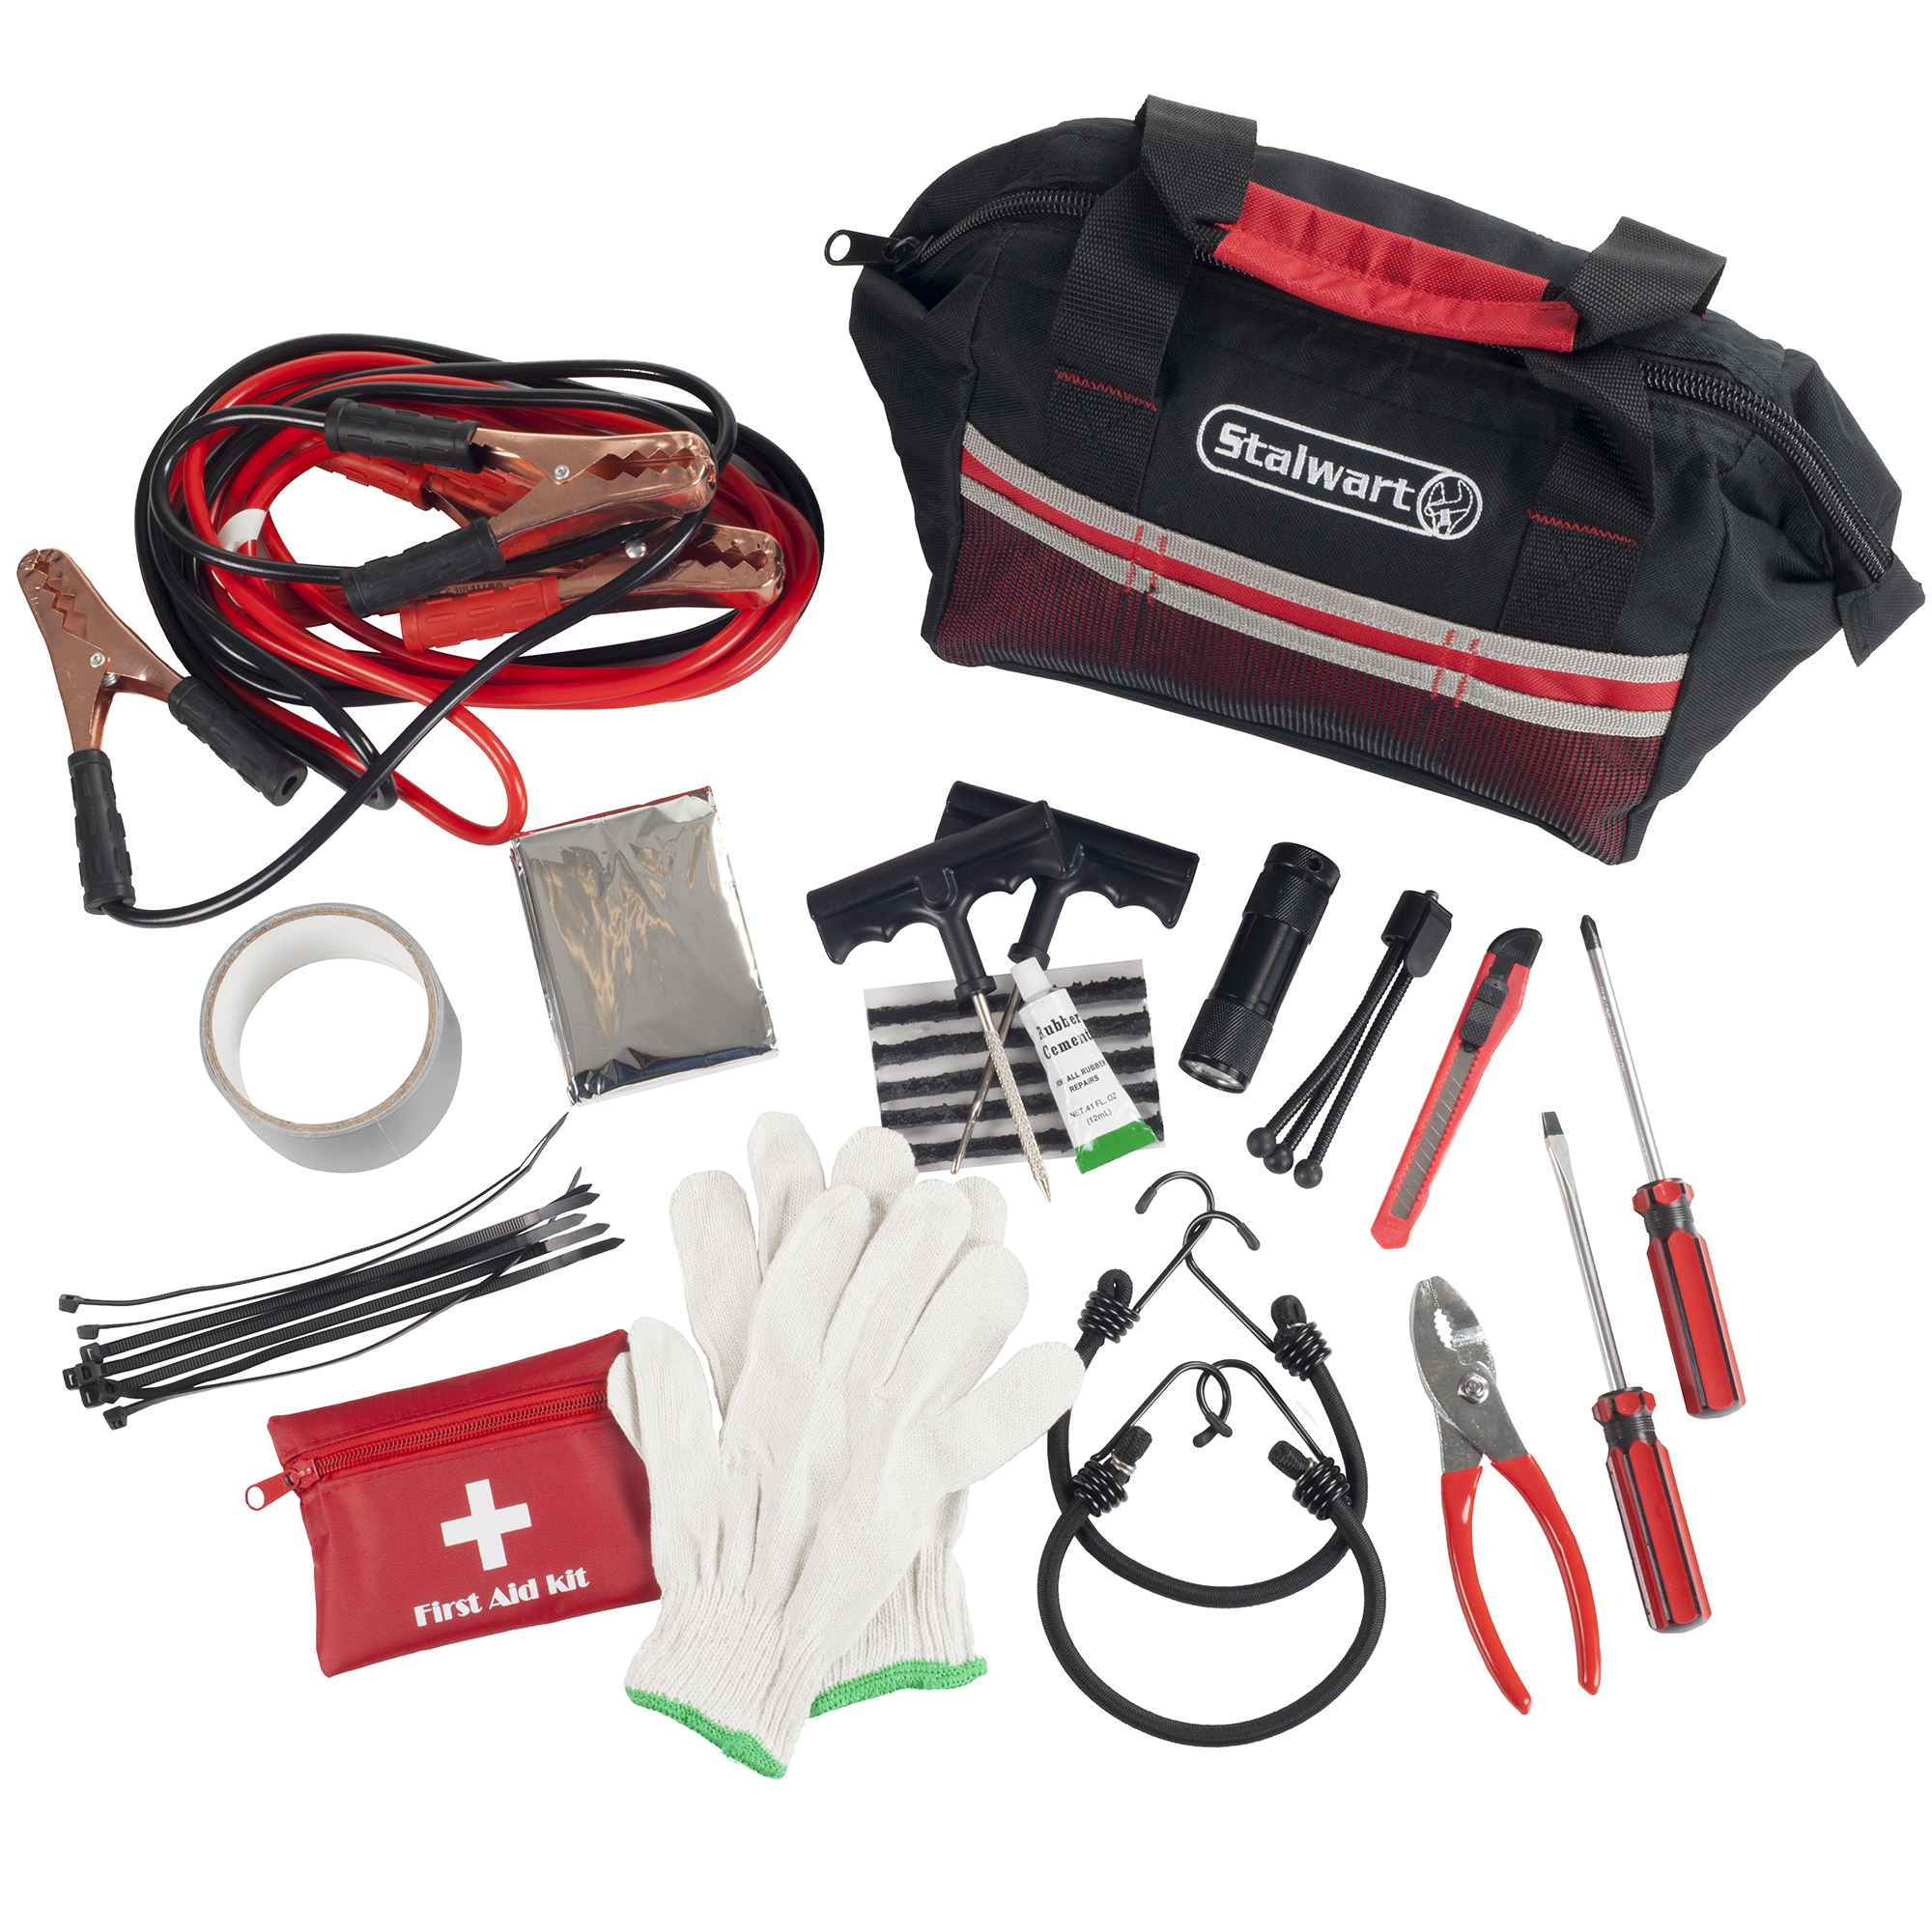 55-Piece Emergency Roadside Kit with Travel Bag